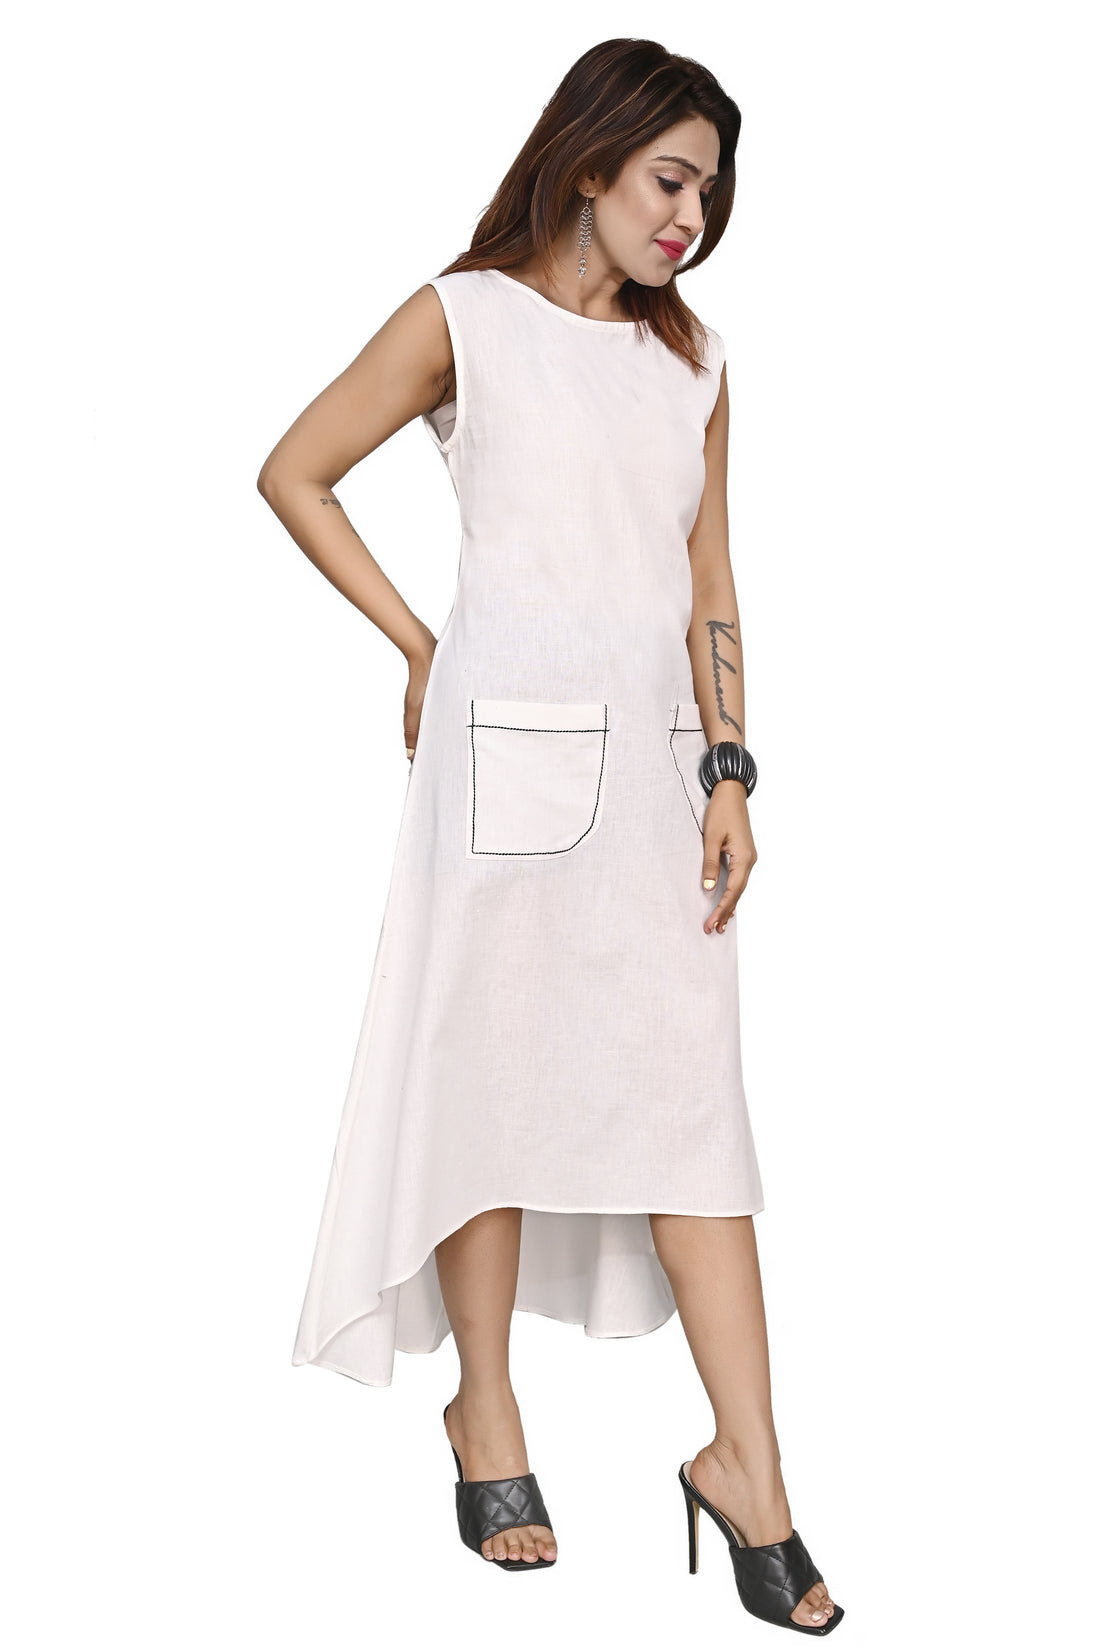 Nirmal online Premium Cotton Tunic Dress for Women in White Colour